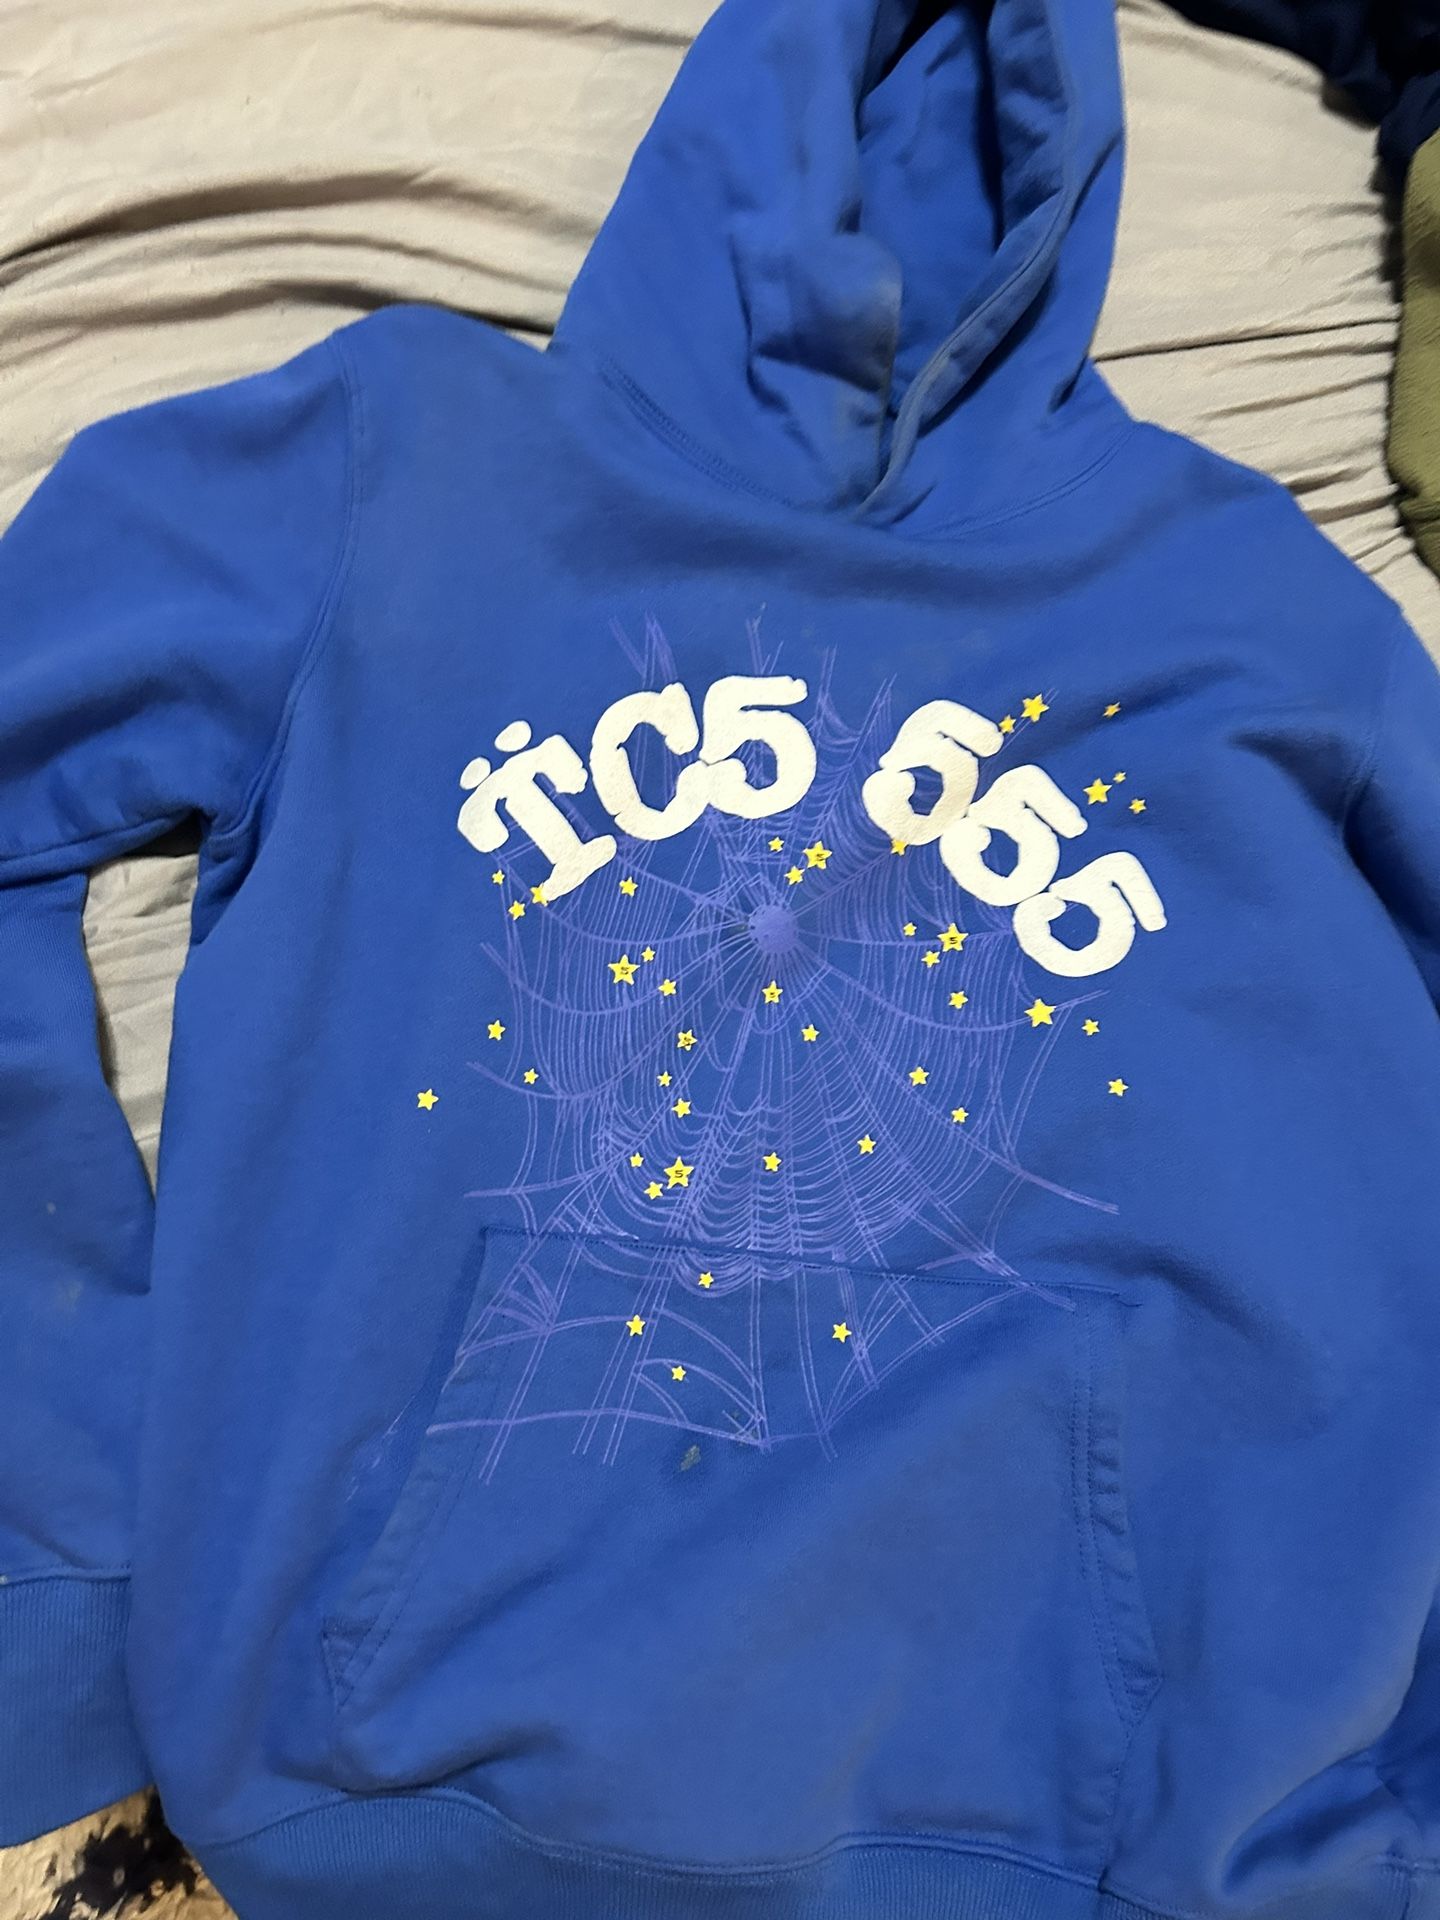 Blue TC5 555 Spider hoodie